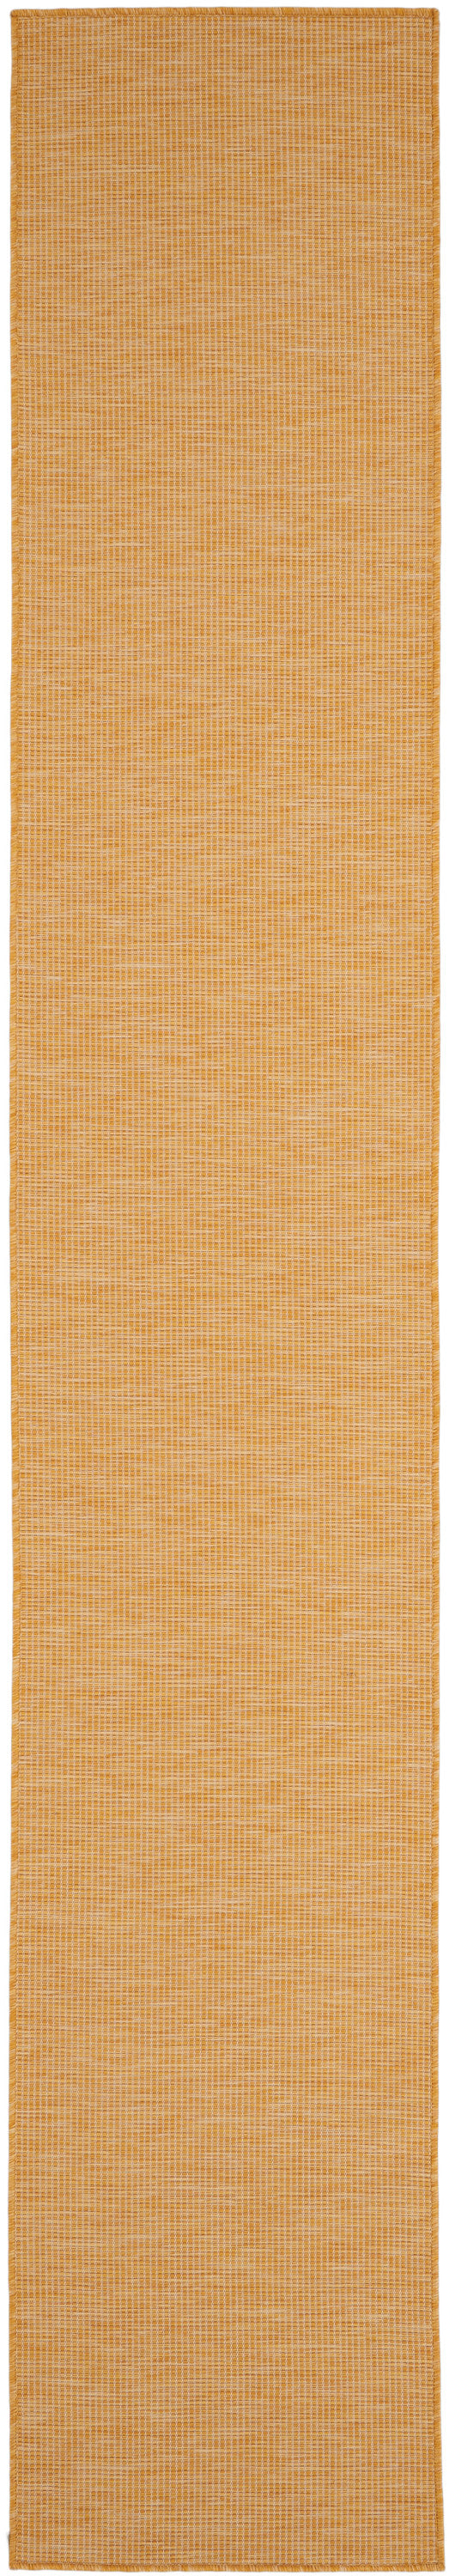 media image for positano yellow rug by nourison 99446842442 redo 3 286